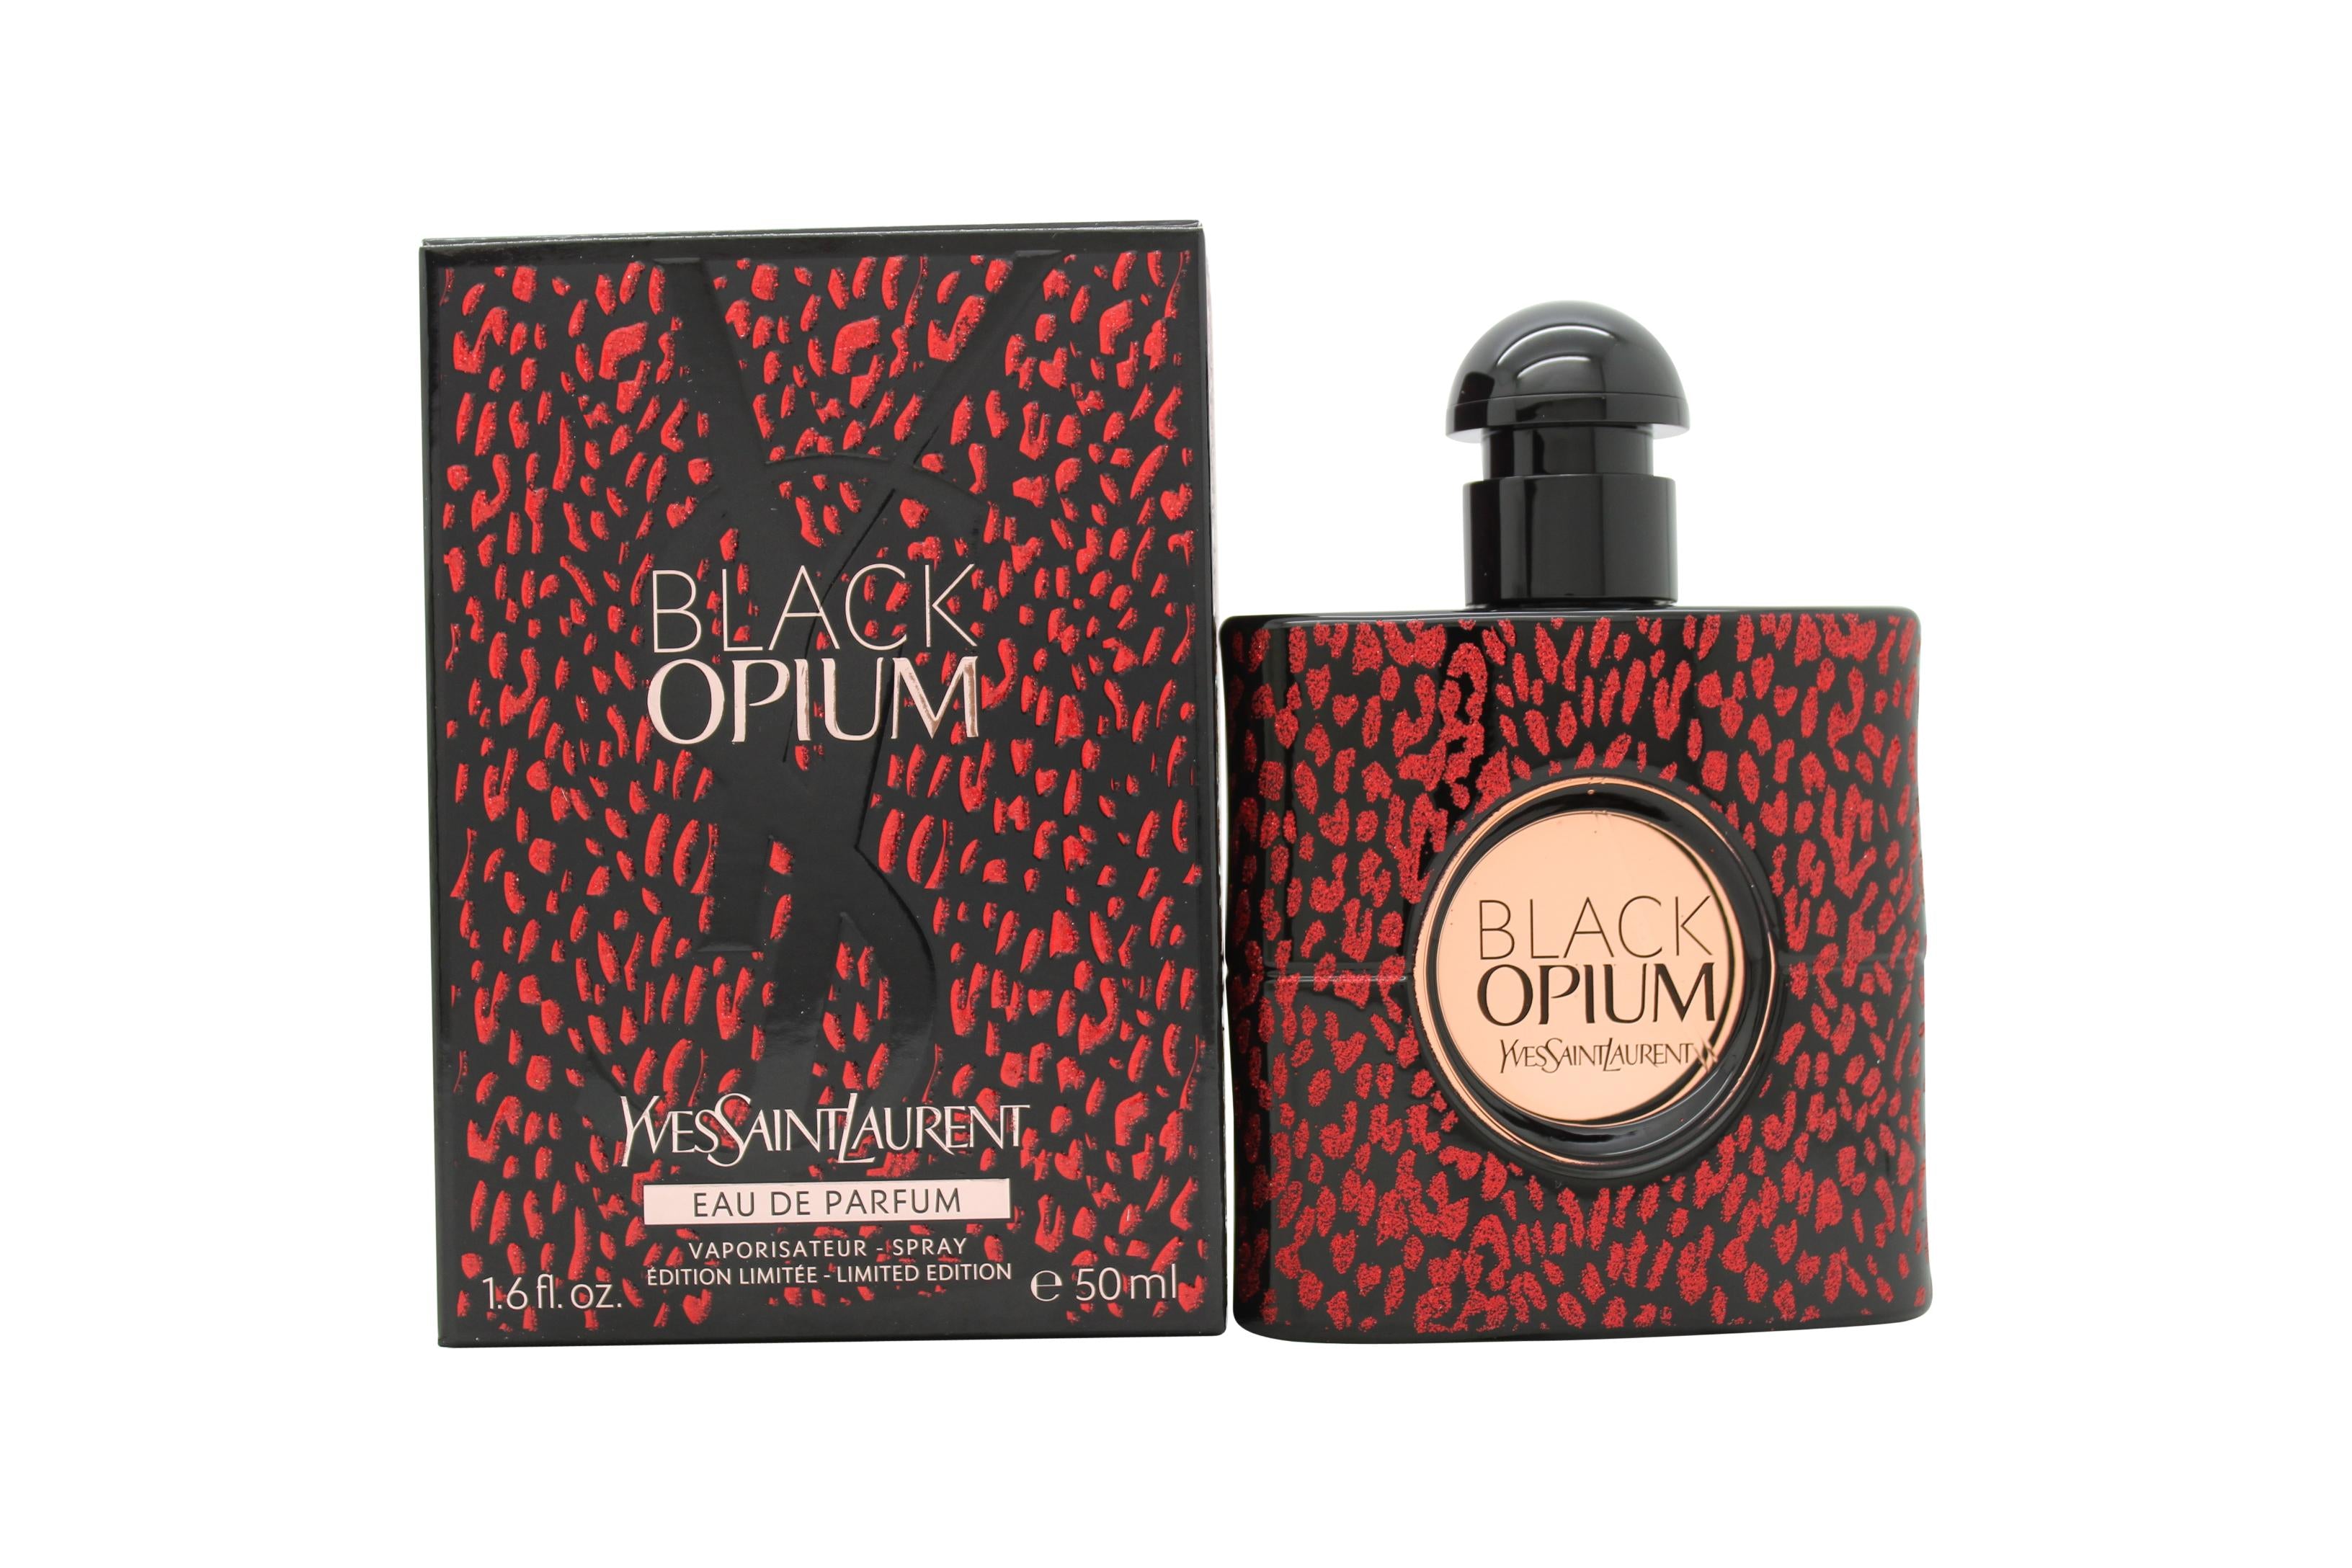 Yves Saint Laurent Black Opium Eau de Parfum 50ml Spray - Baby Cat Collector Edition - Peacock Bazaar